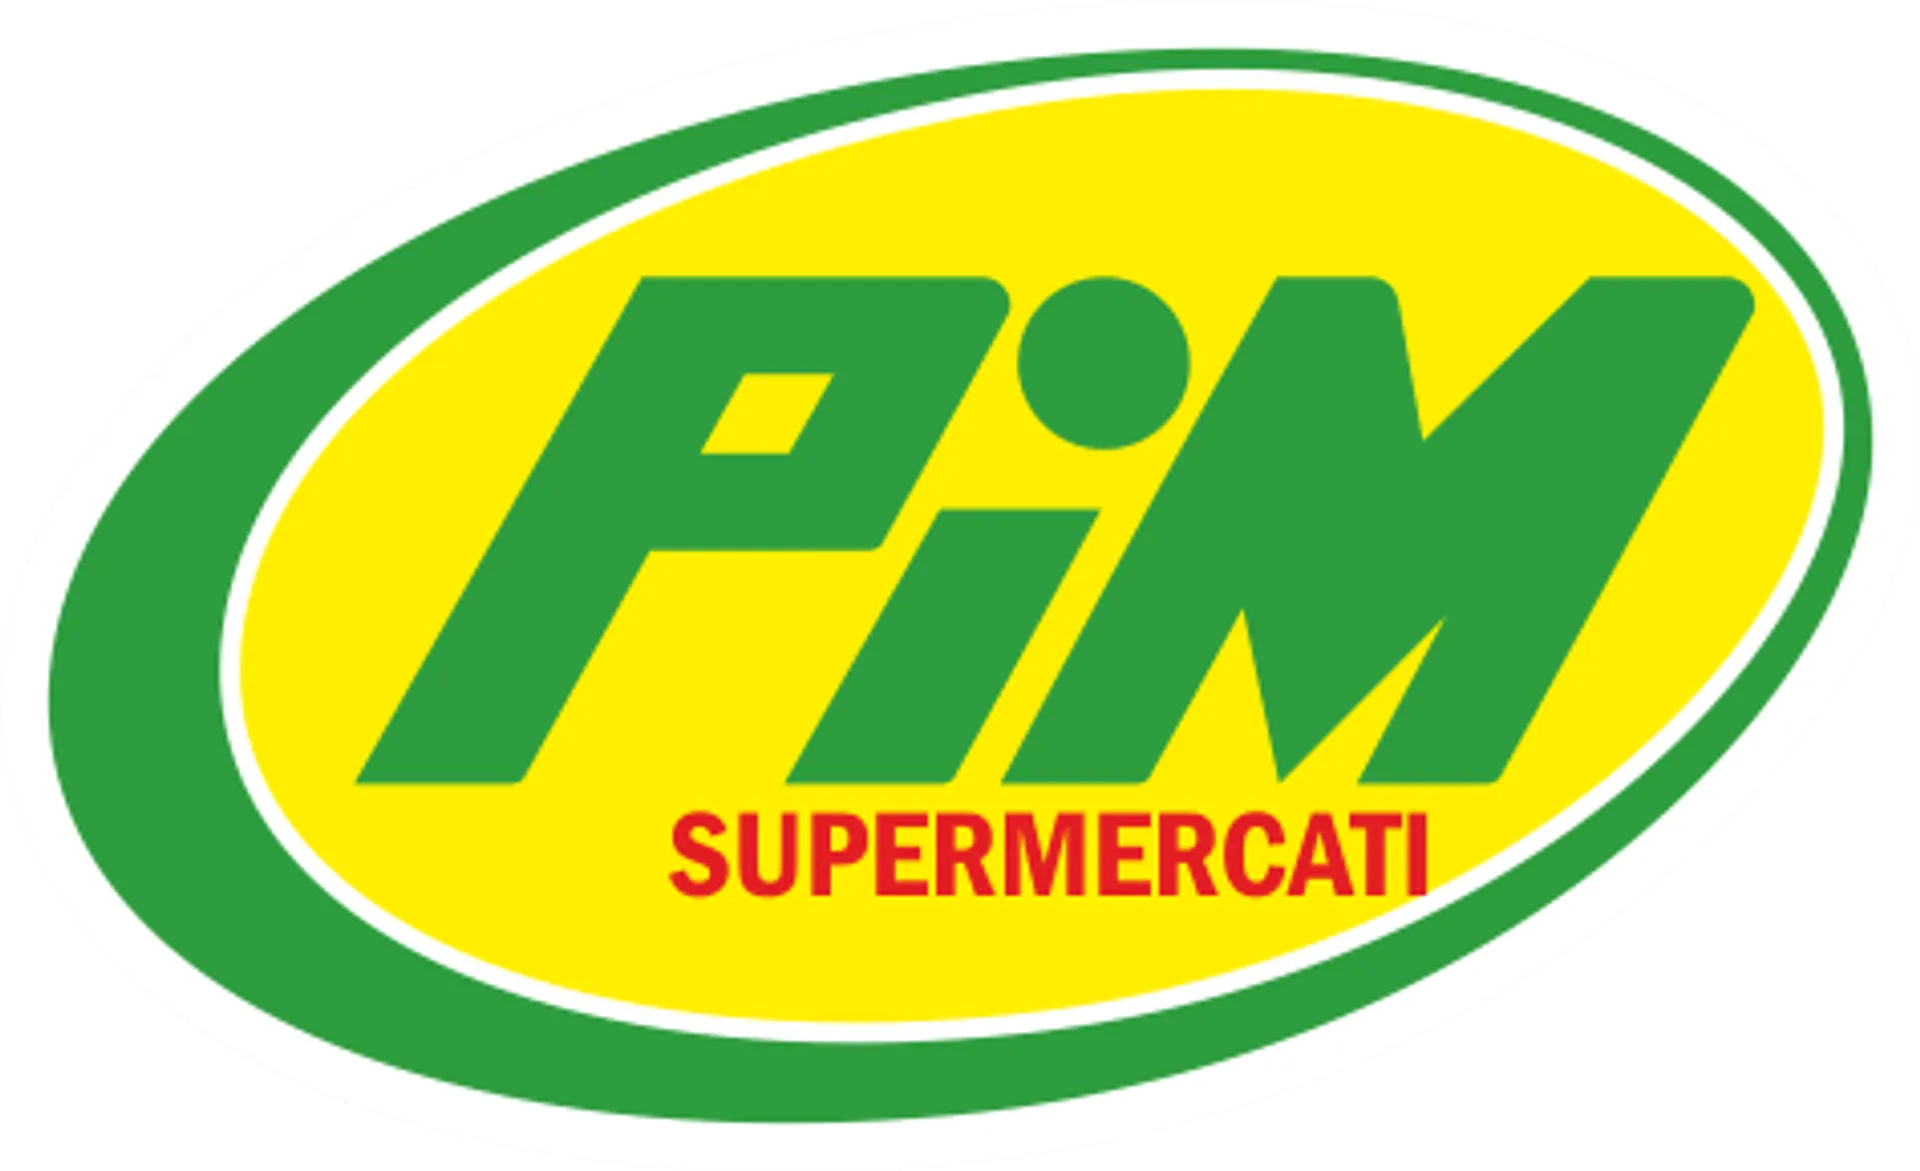 PIM SUPERMERCATI logo